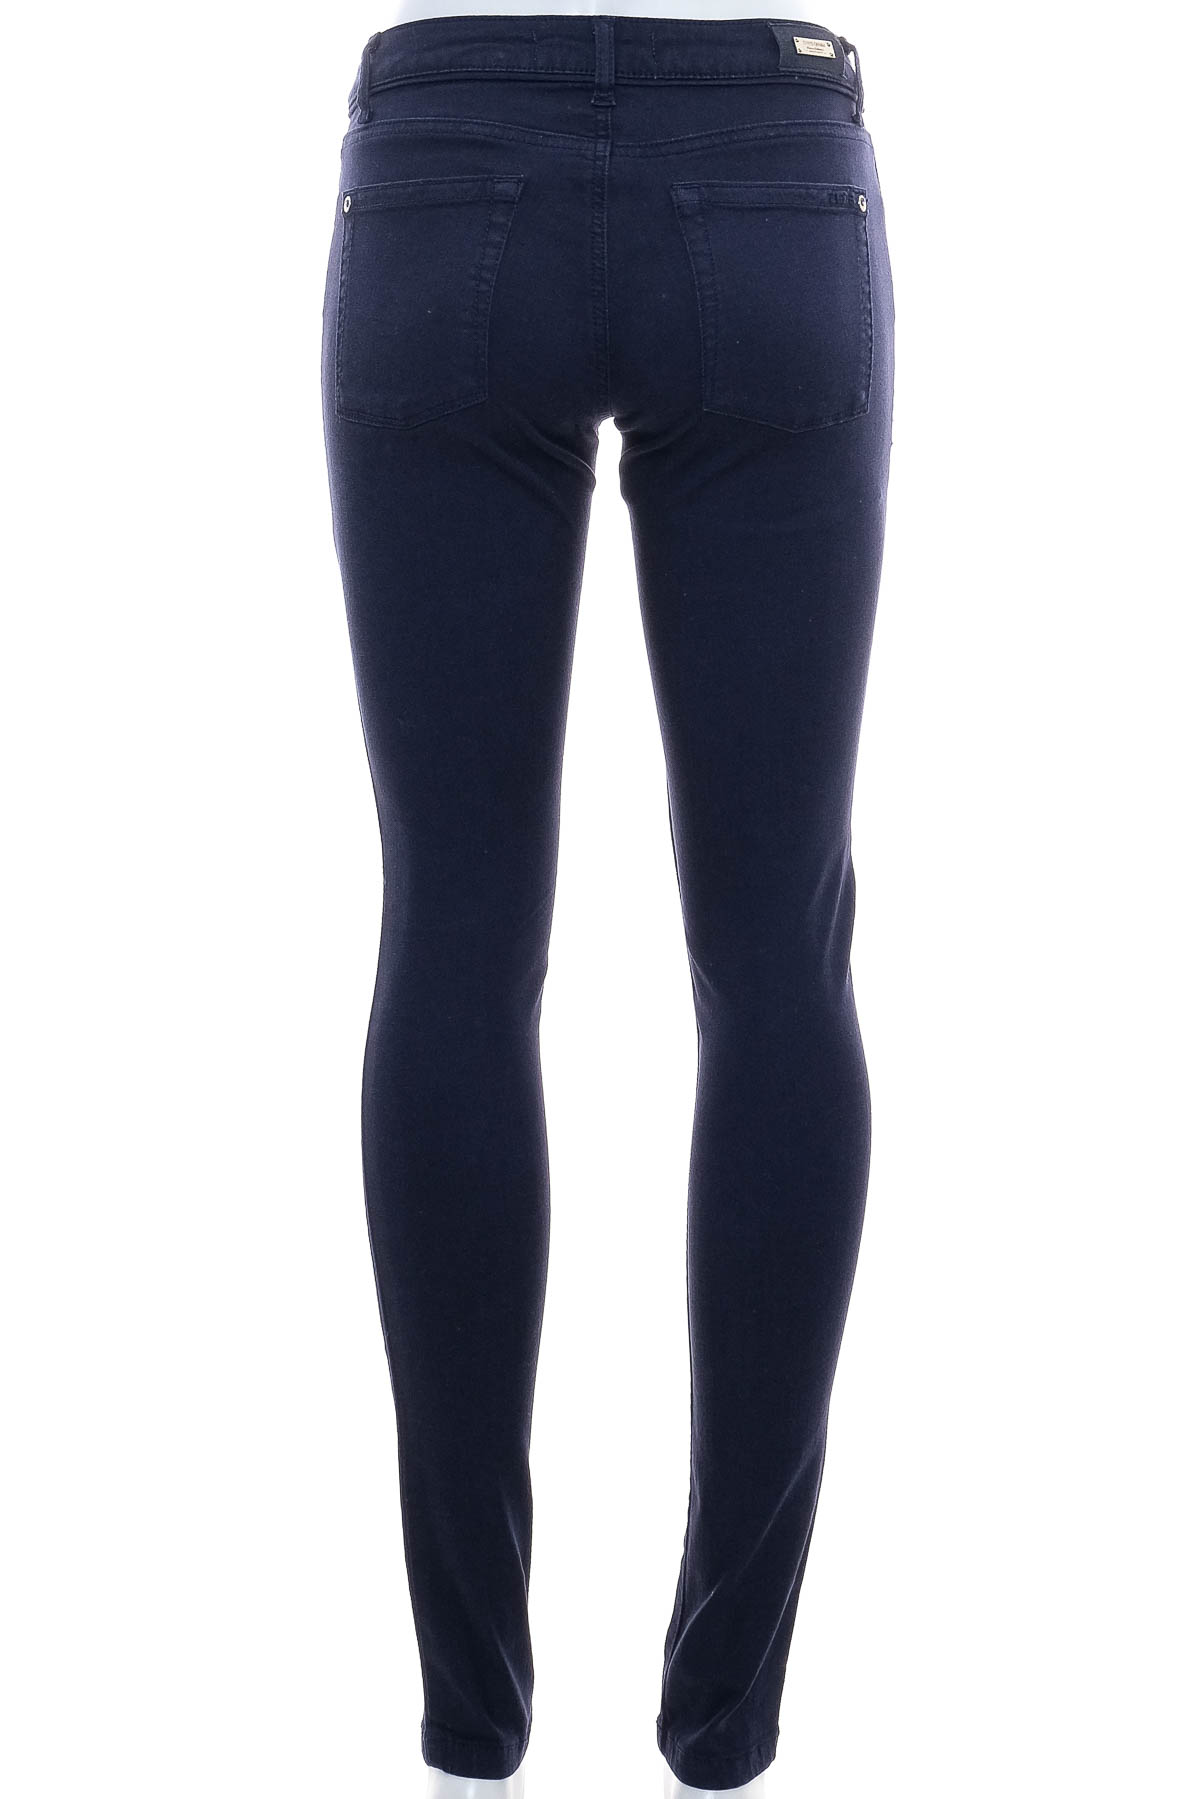 Women's jeans - ZARA Basic - 1